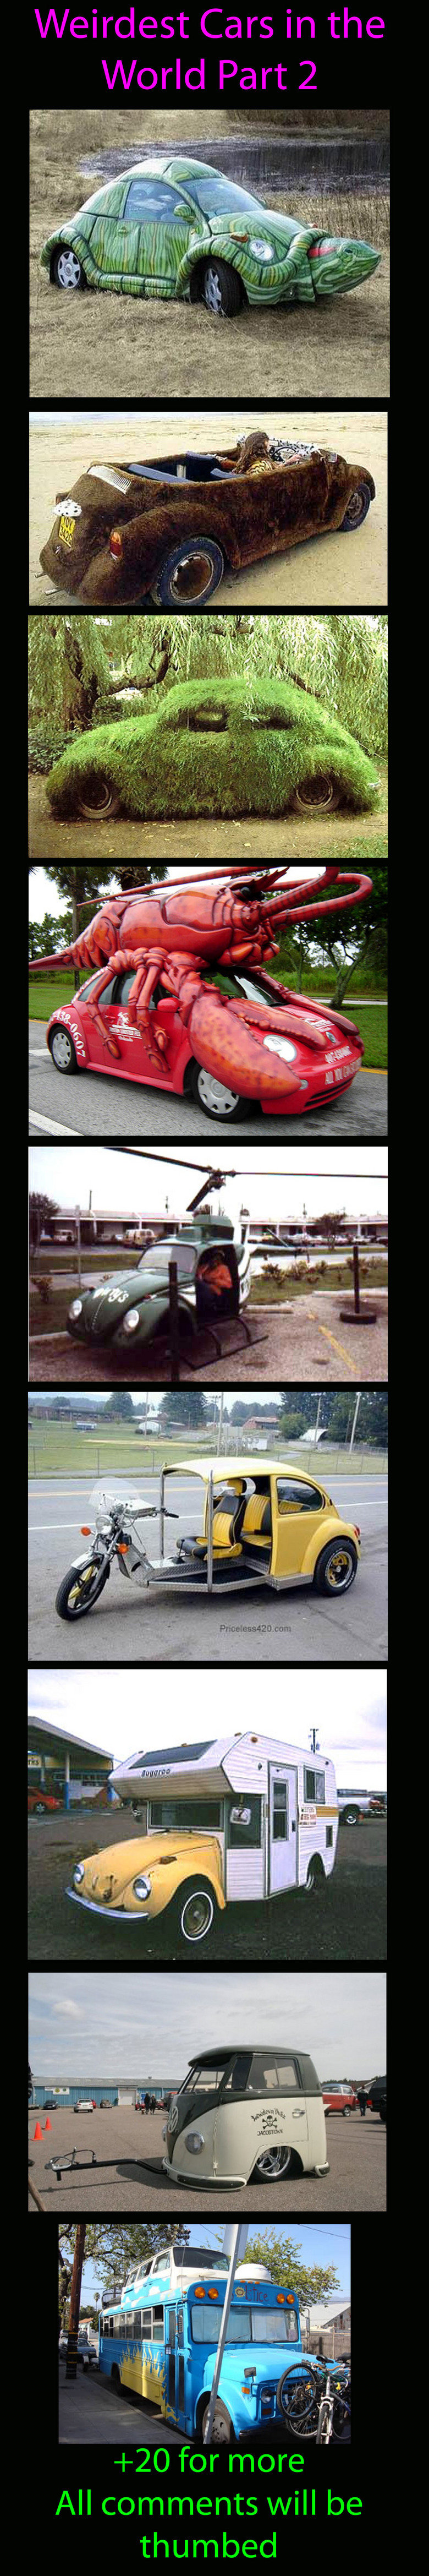 Weird Cars Part 2. Part 1:&lt;a href=&quot;pictures/702019/Weird+Cars/&quot; target=blank&gt;funnyjunk.com/funny_pictures/702019/Weird+Cars/&lt;/a&gt;.. Lol almost all were VW bugs